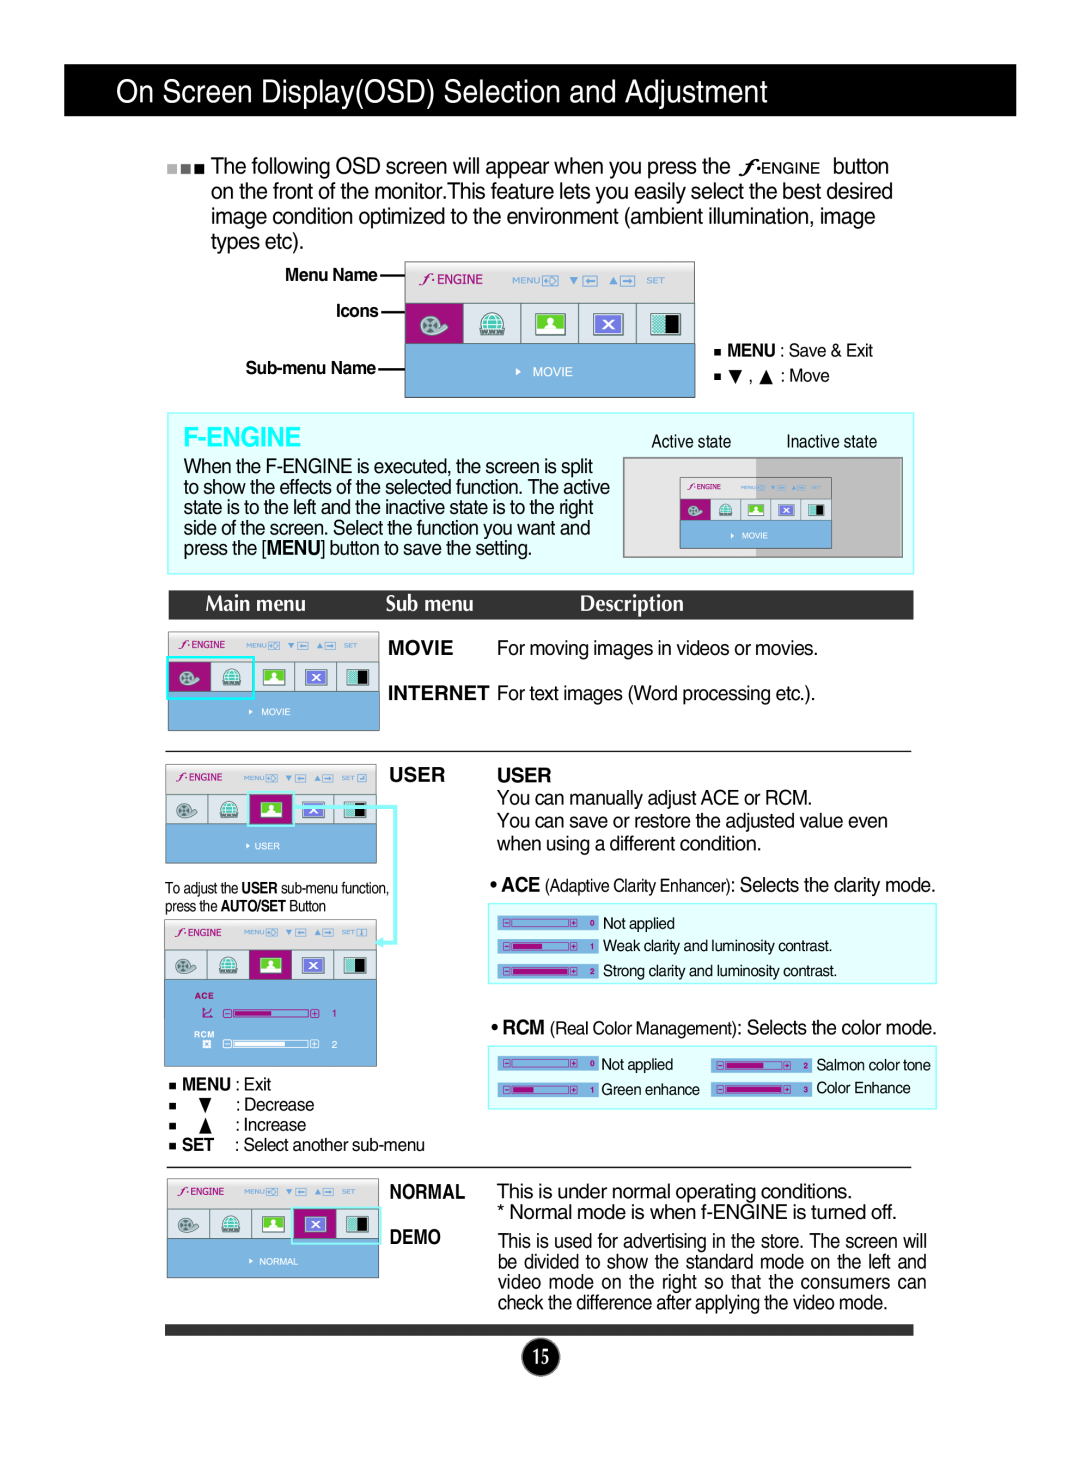 LG Electronics W2043SE Sub menu, On Screen DisplayOSD Selection and Adjustment, F-Engine, Main menu, Description, Movie 